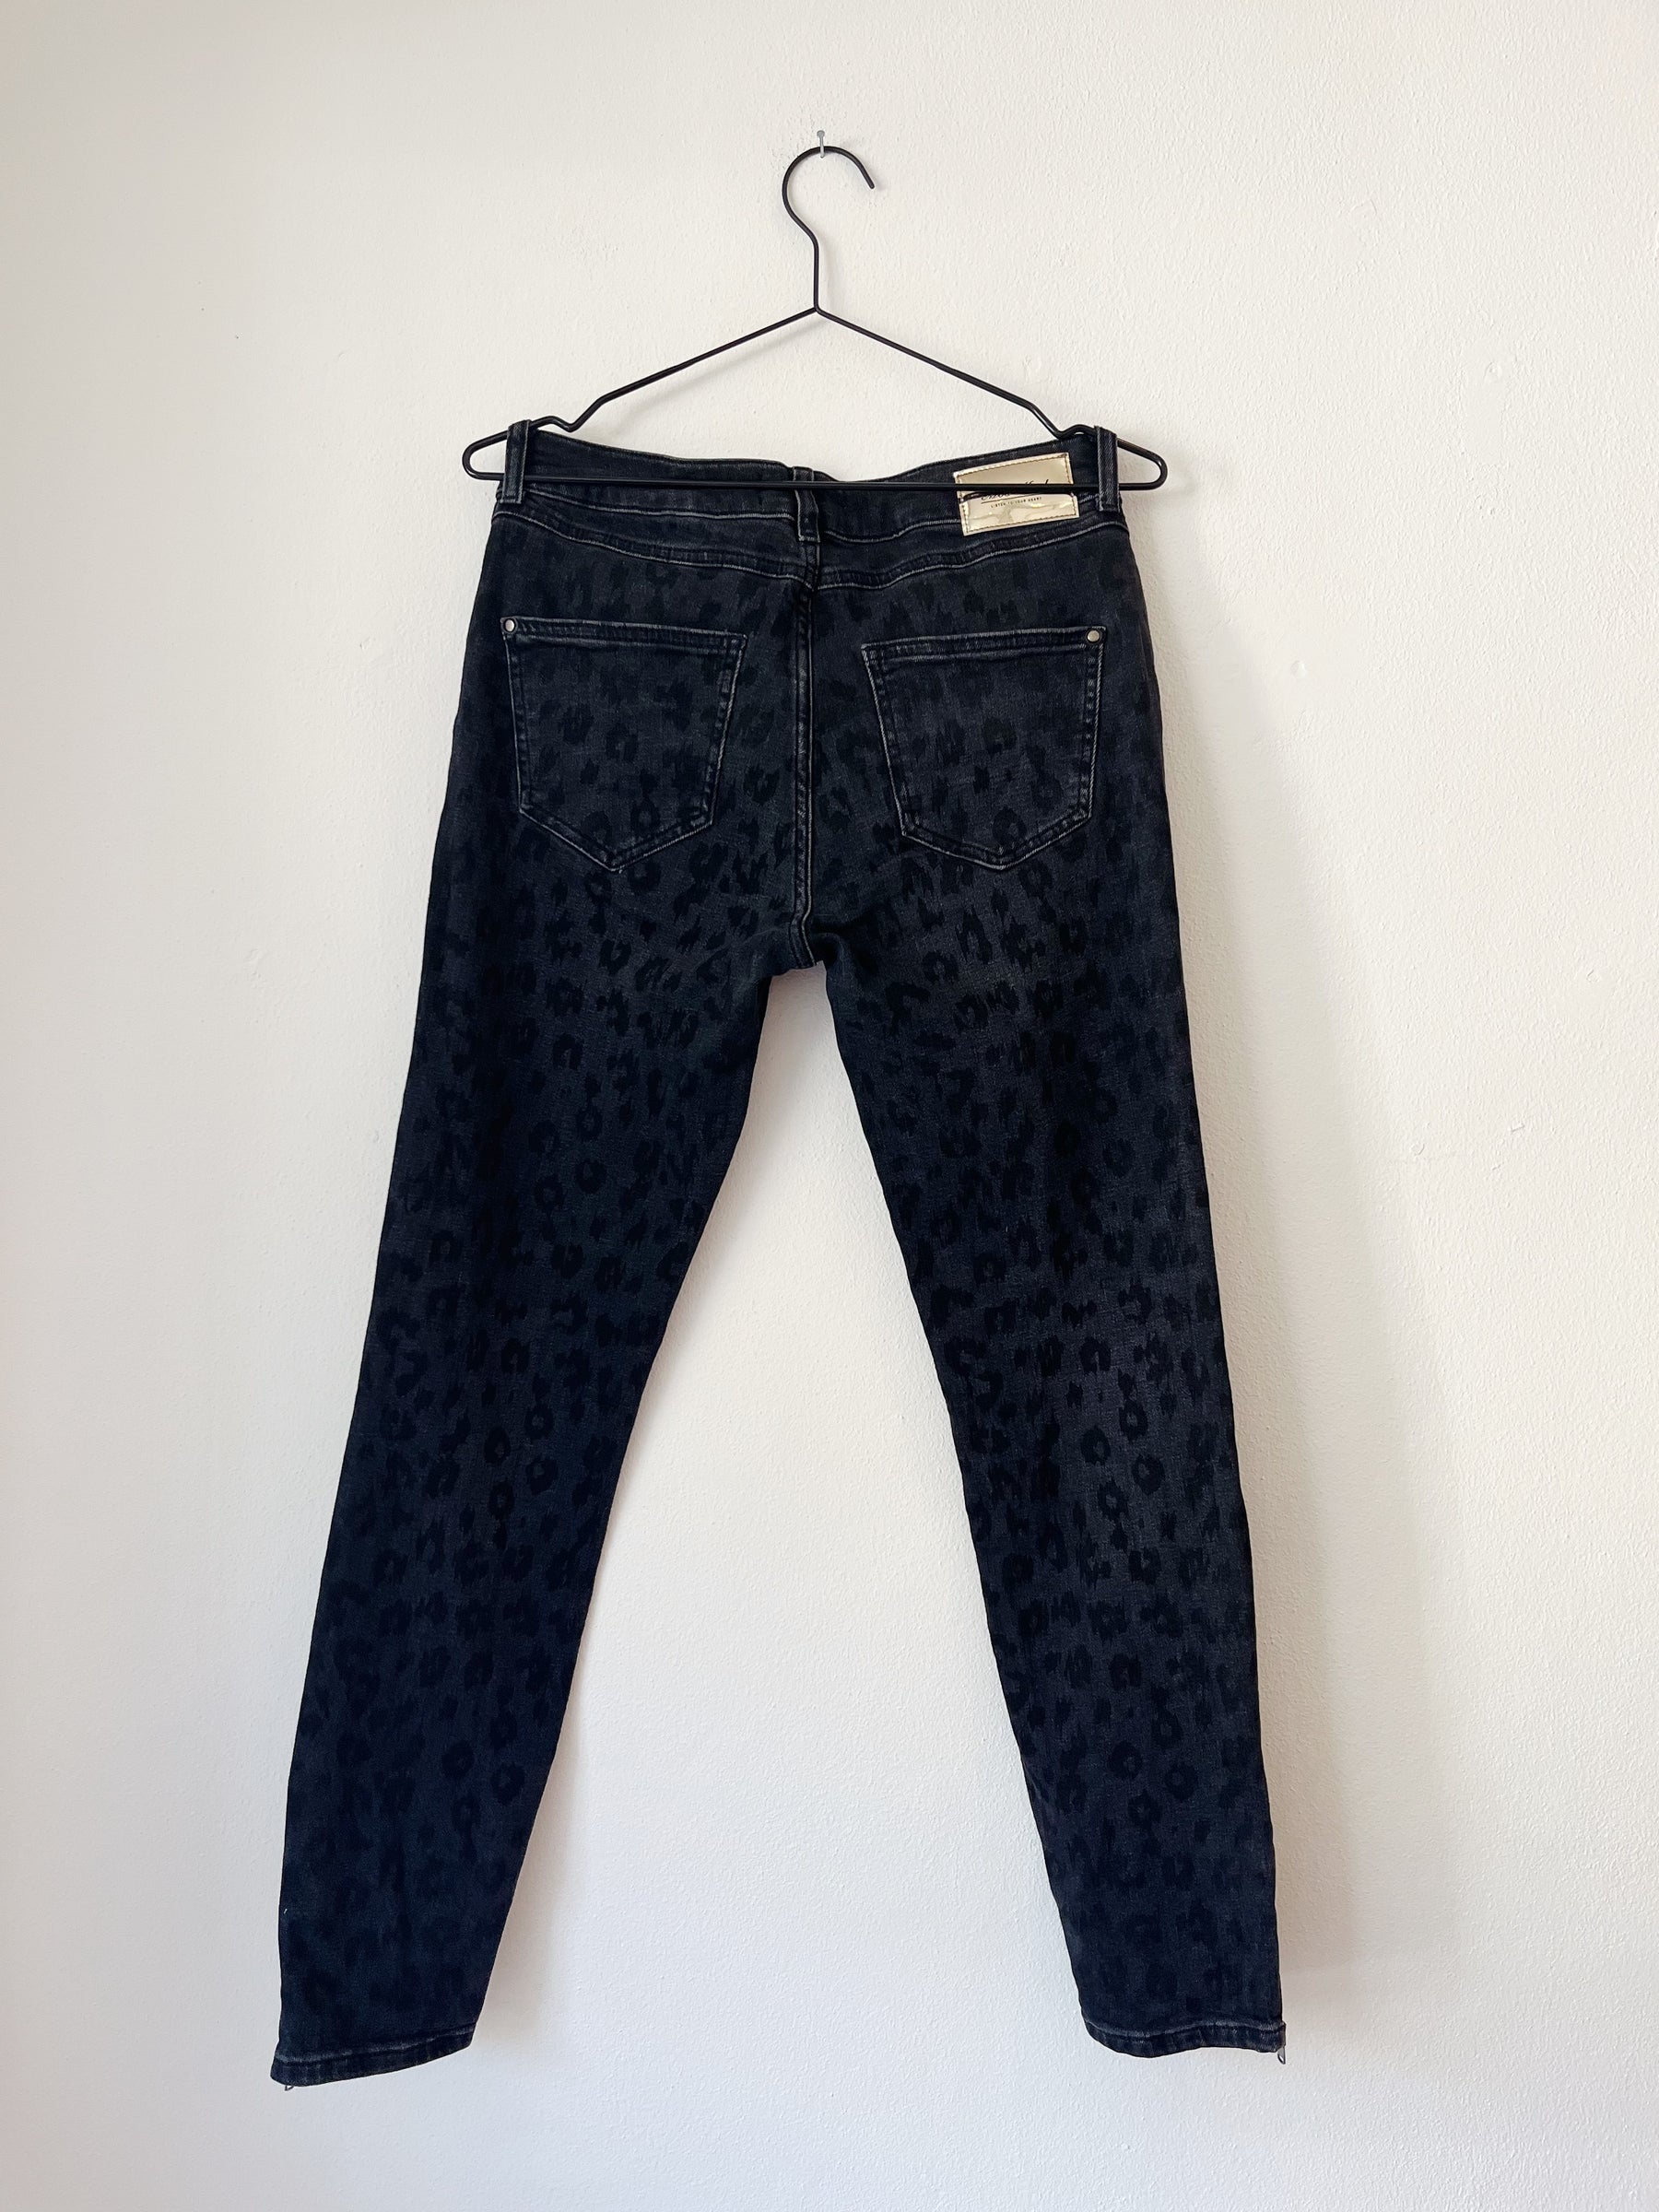 Mos Mosh leopard jeans